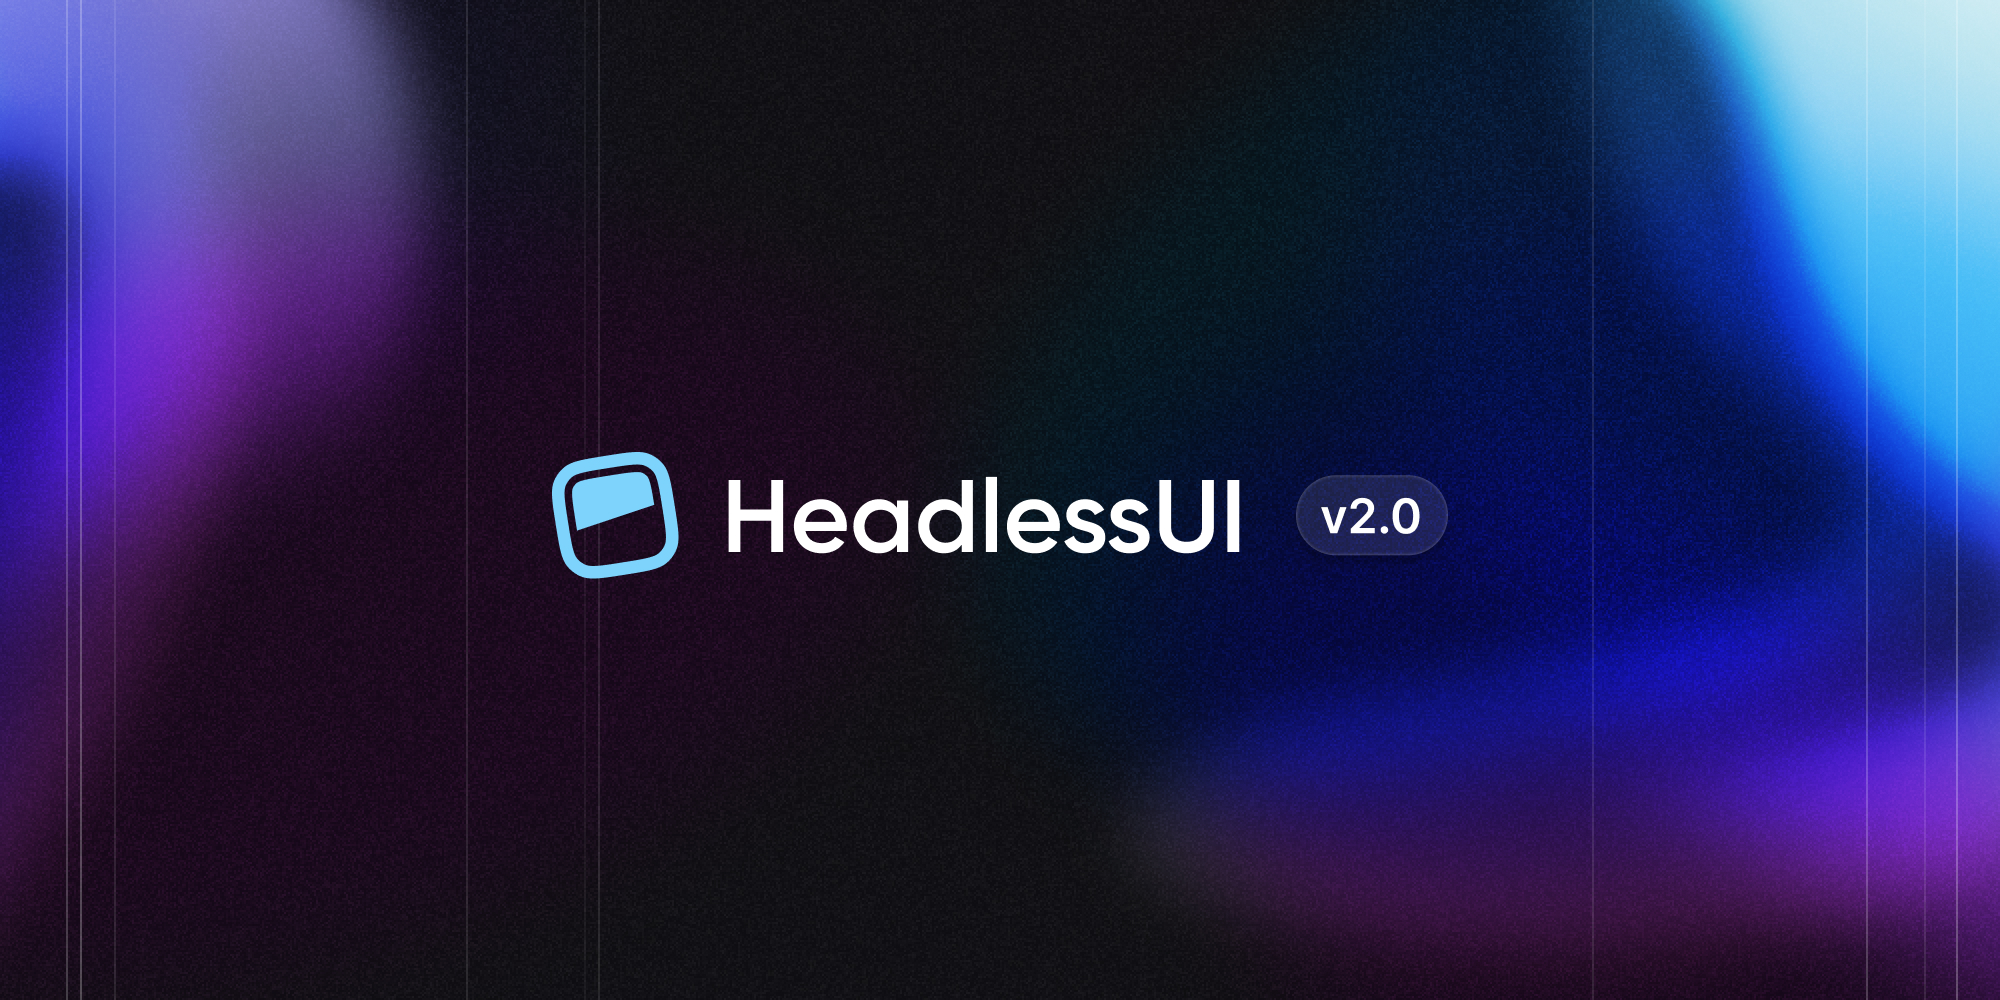 Headless UI v2.0